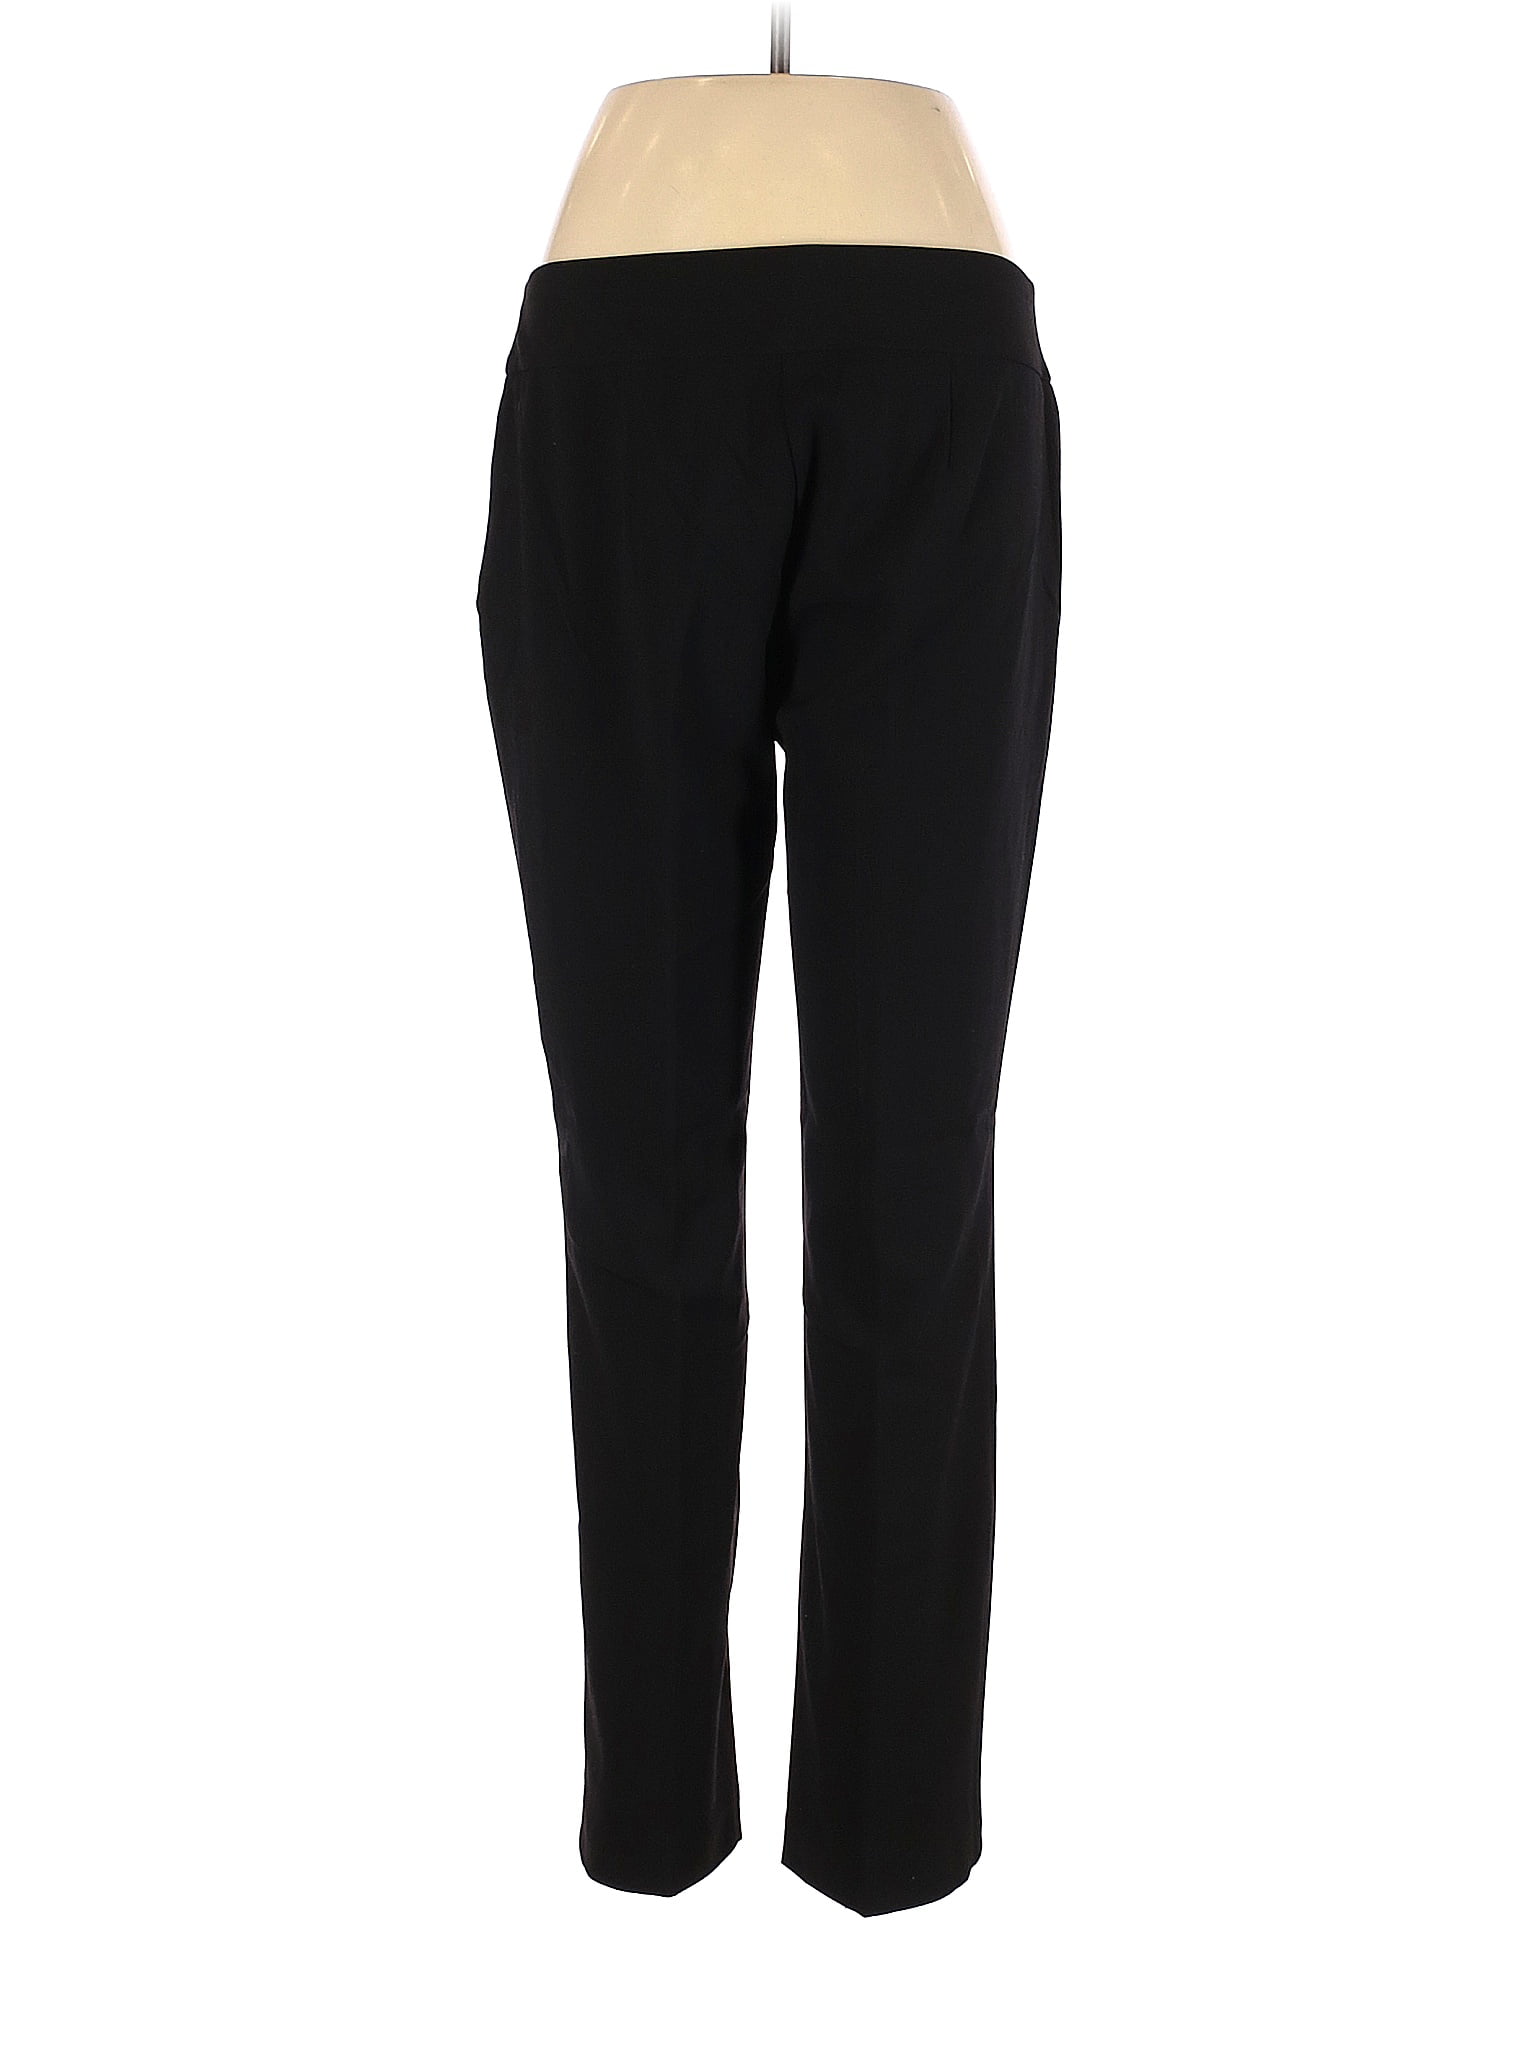 Pre-Owned Counterparts Women's Size 8 Dress Pants - Walmart.com